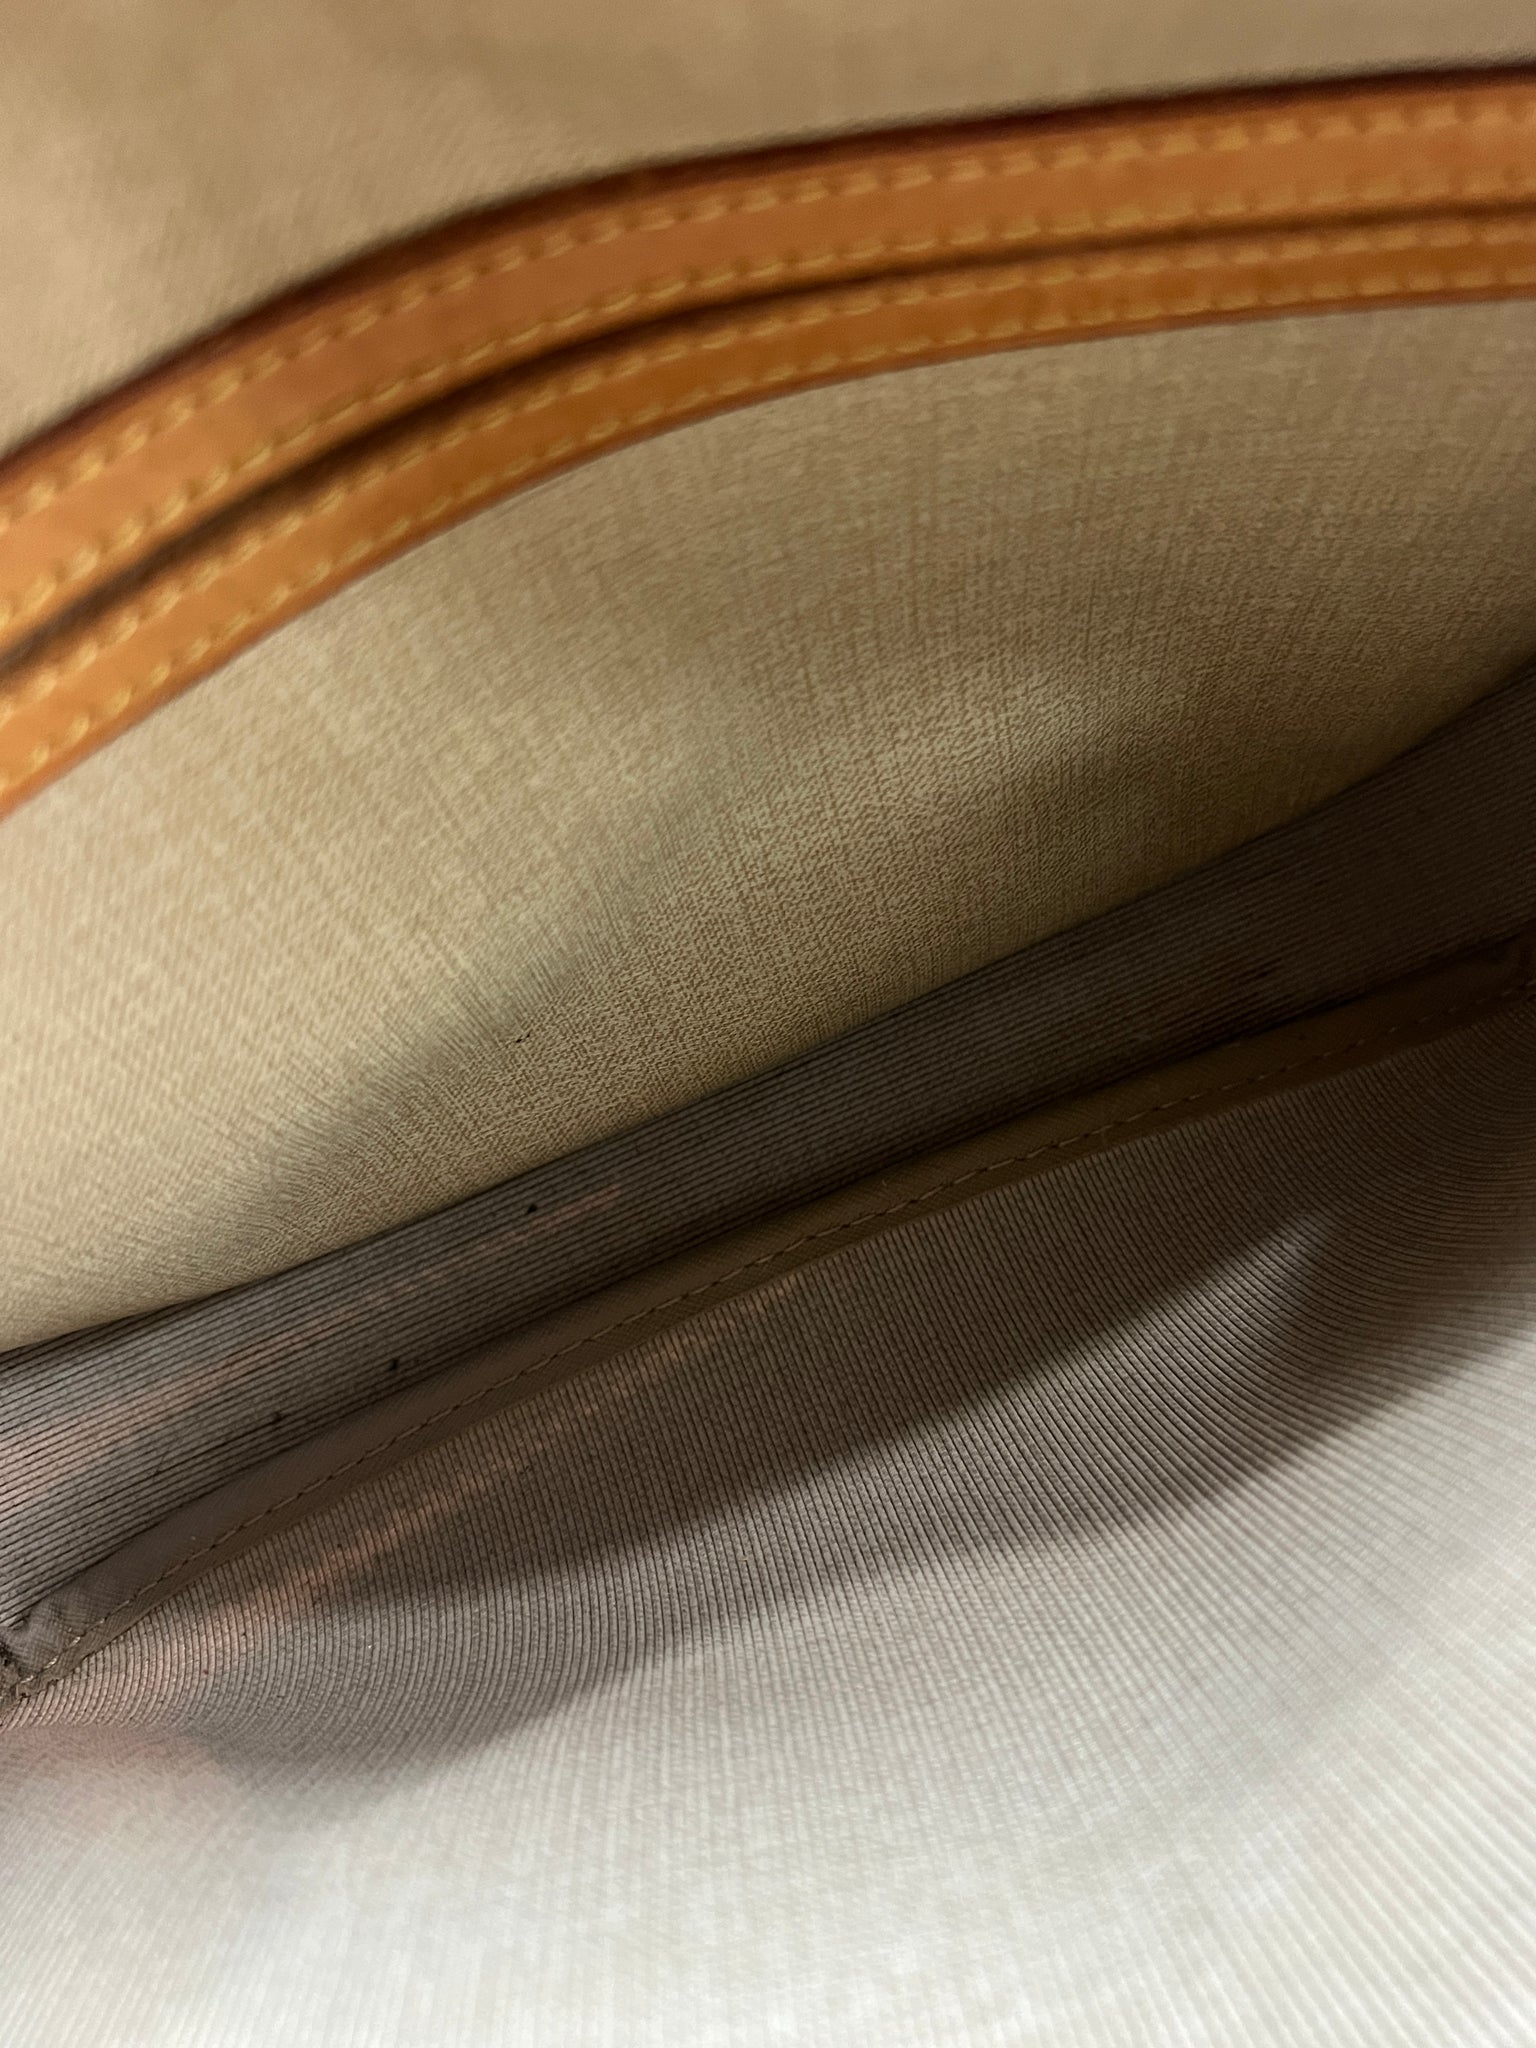 Authentic Louis Vuitton Monogram Reporter PM Bag – Relics to